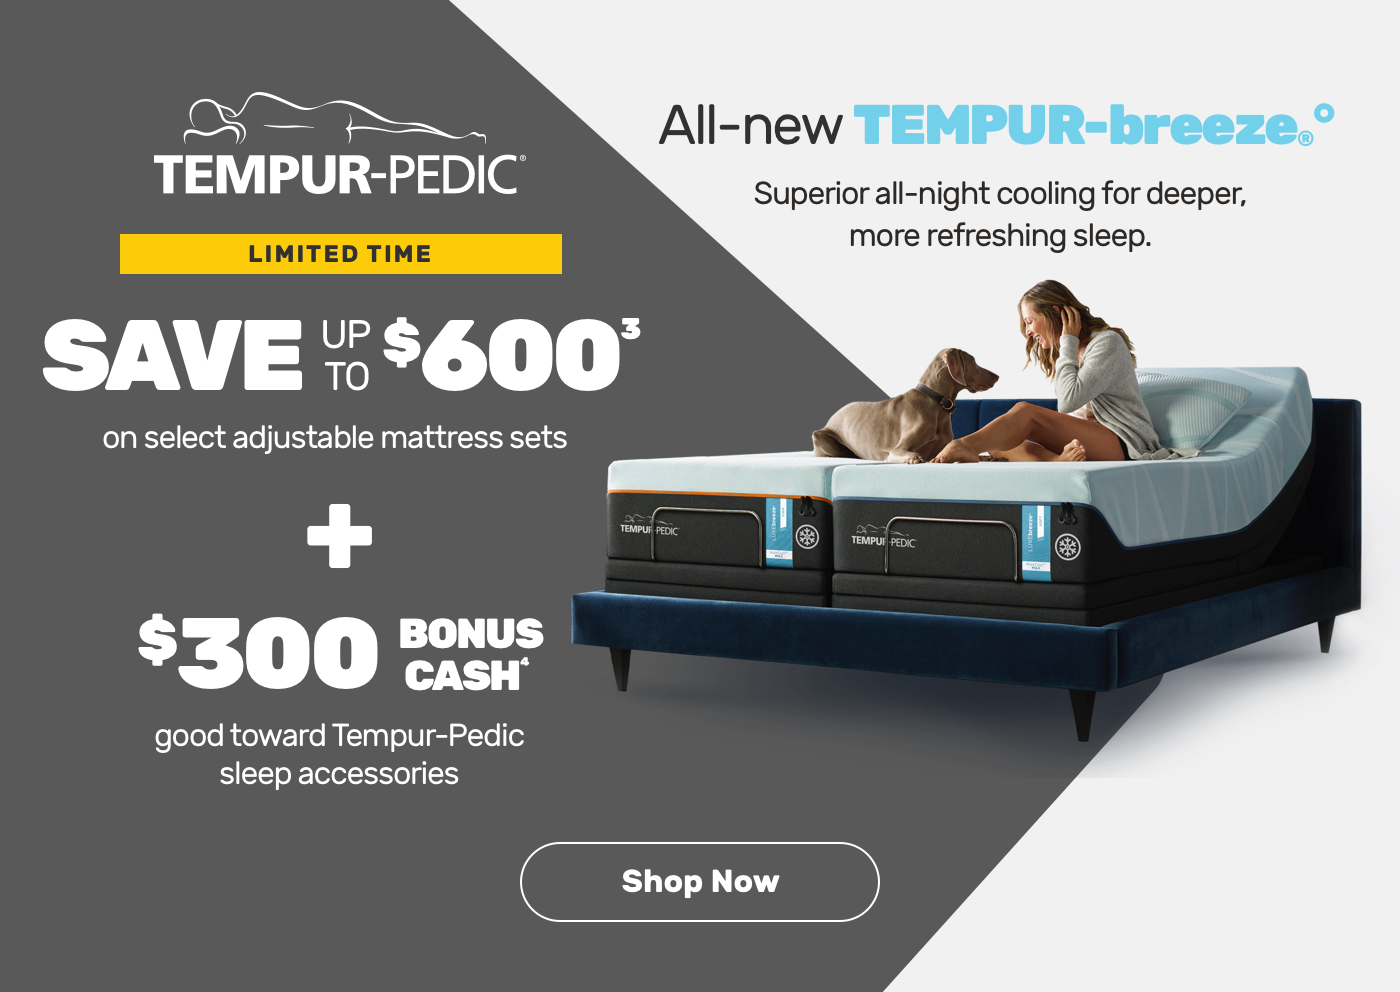 Limited Time. Save up to $600 on select adjustable mattress sets plus $300 bonus cash good towards Temper-Pedic sleep accessories. Shop Now.